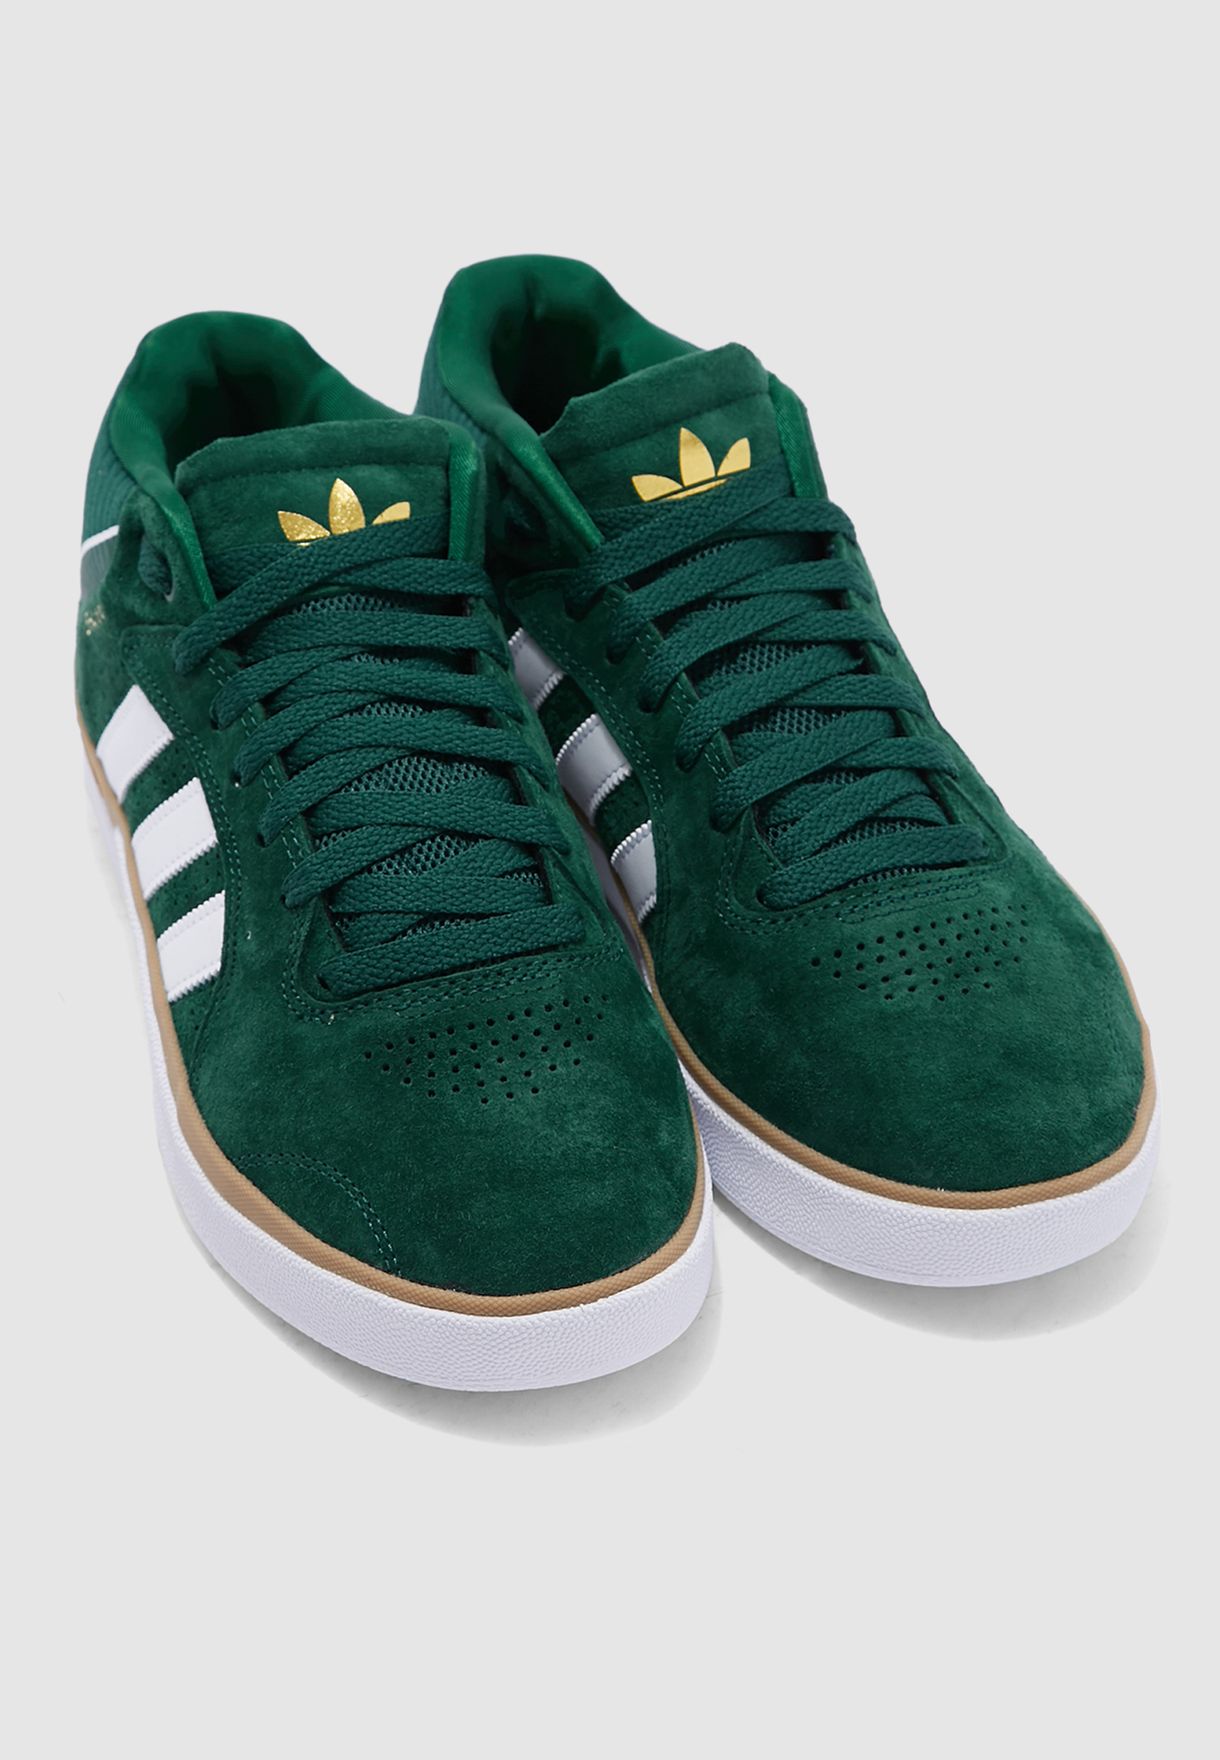 adidas tyshawn shoe green